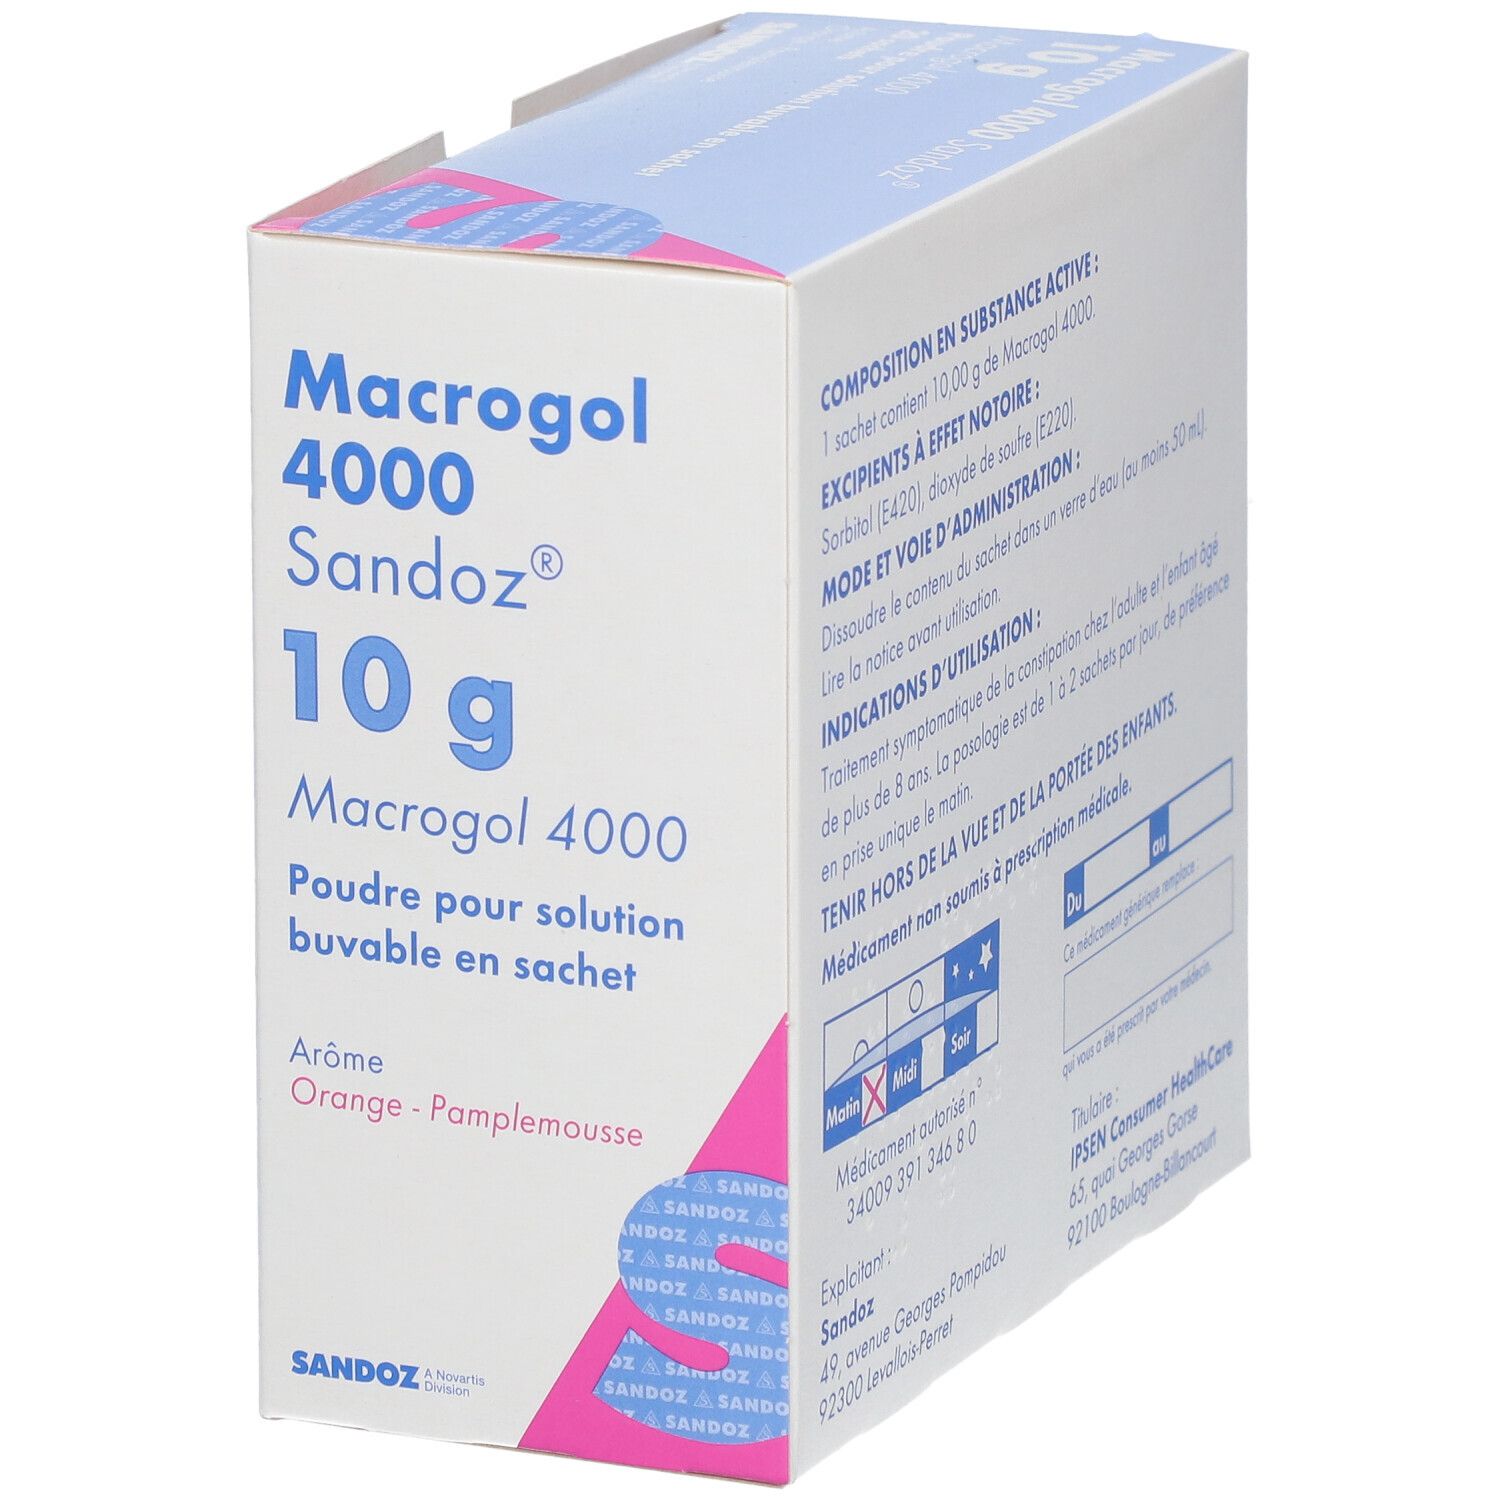 Macrogol 4000 Sandoz®